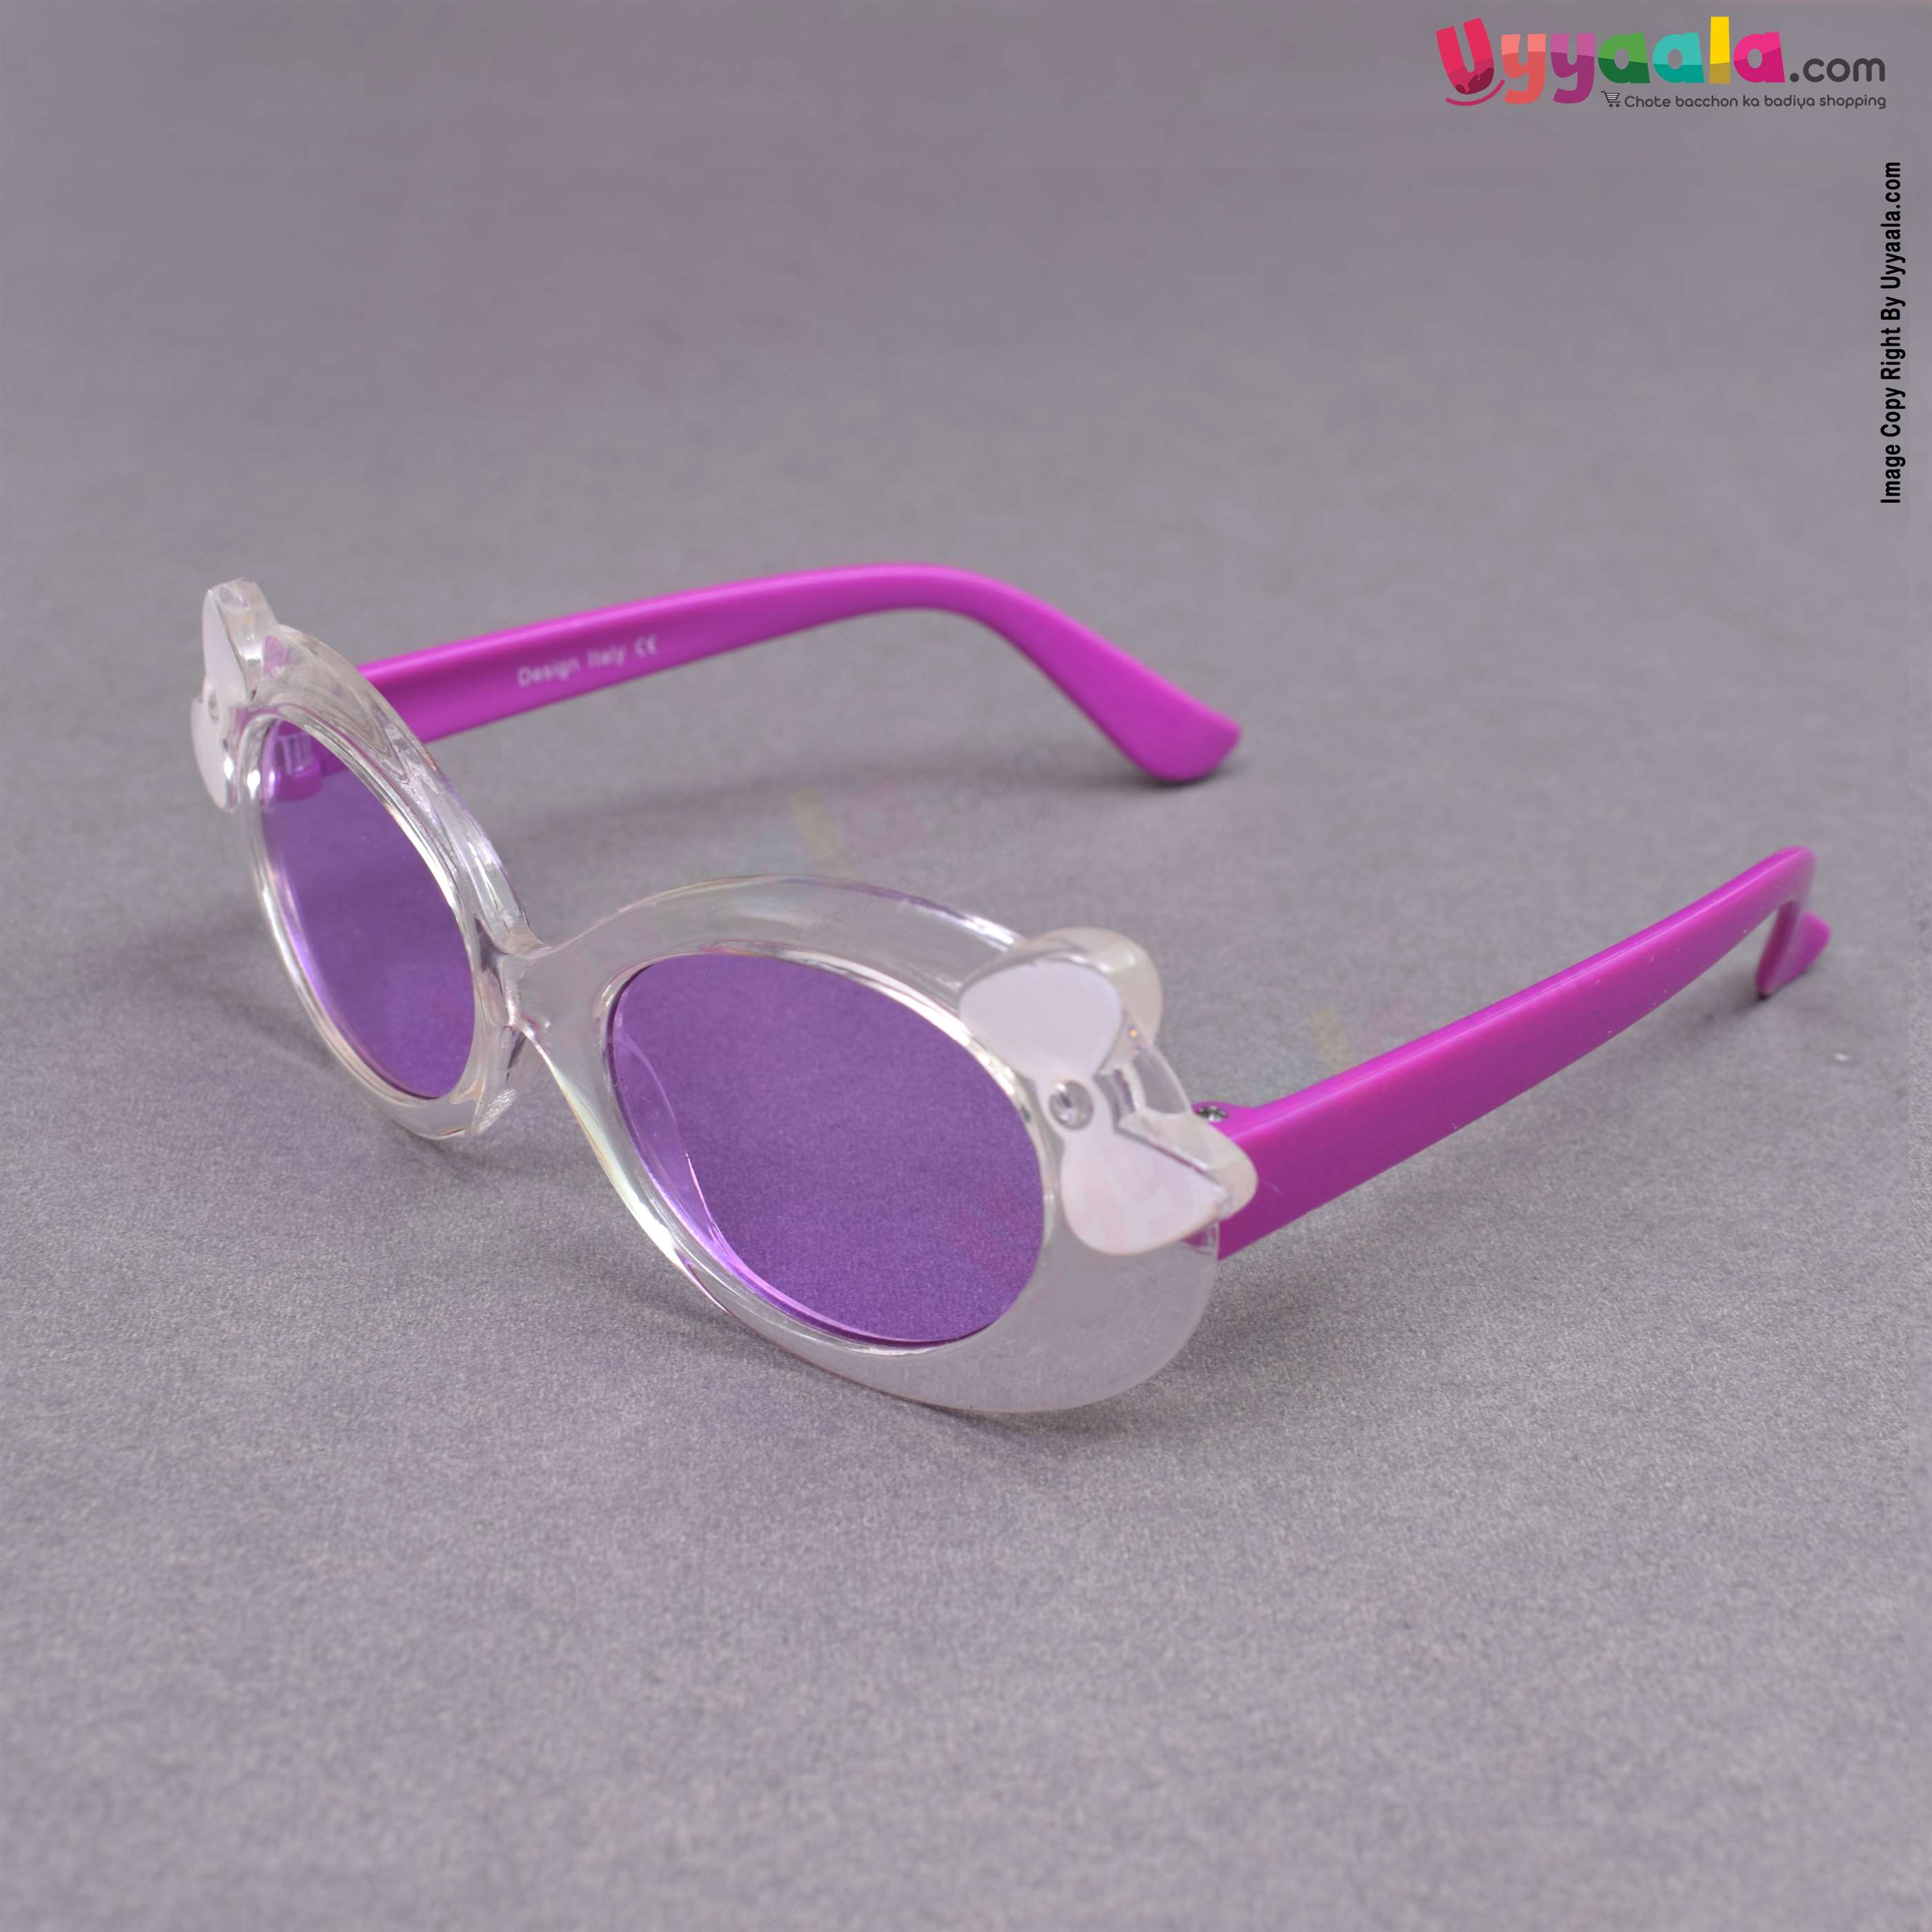 Stylish cat-eye purple shade sunglasses for kids - purple